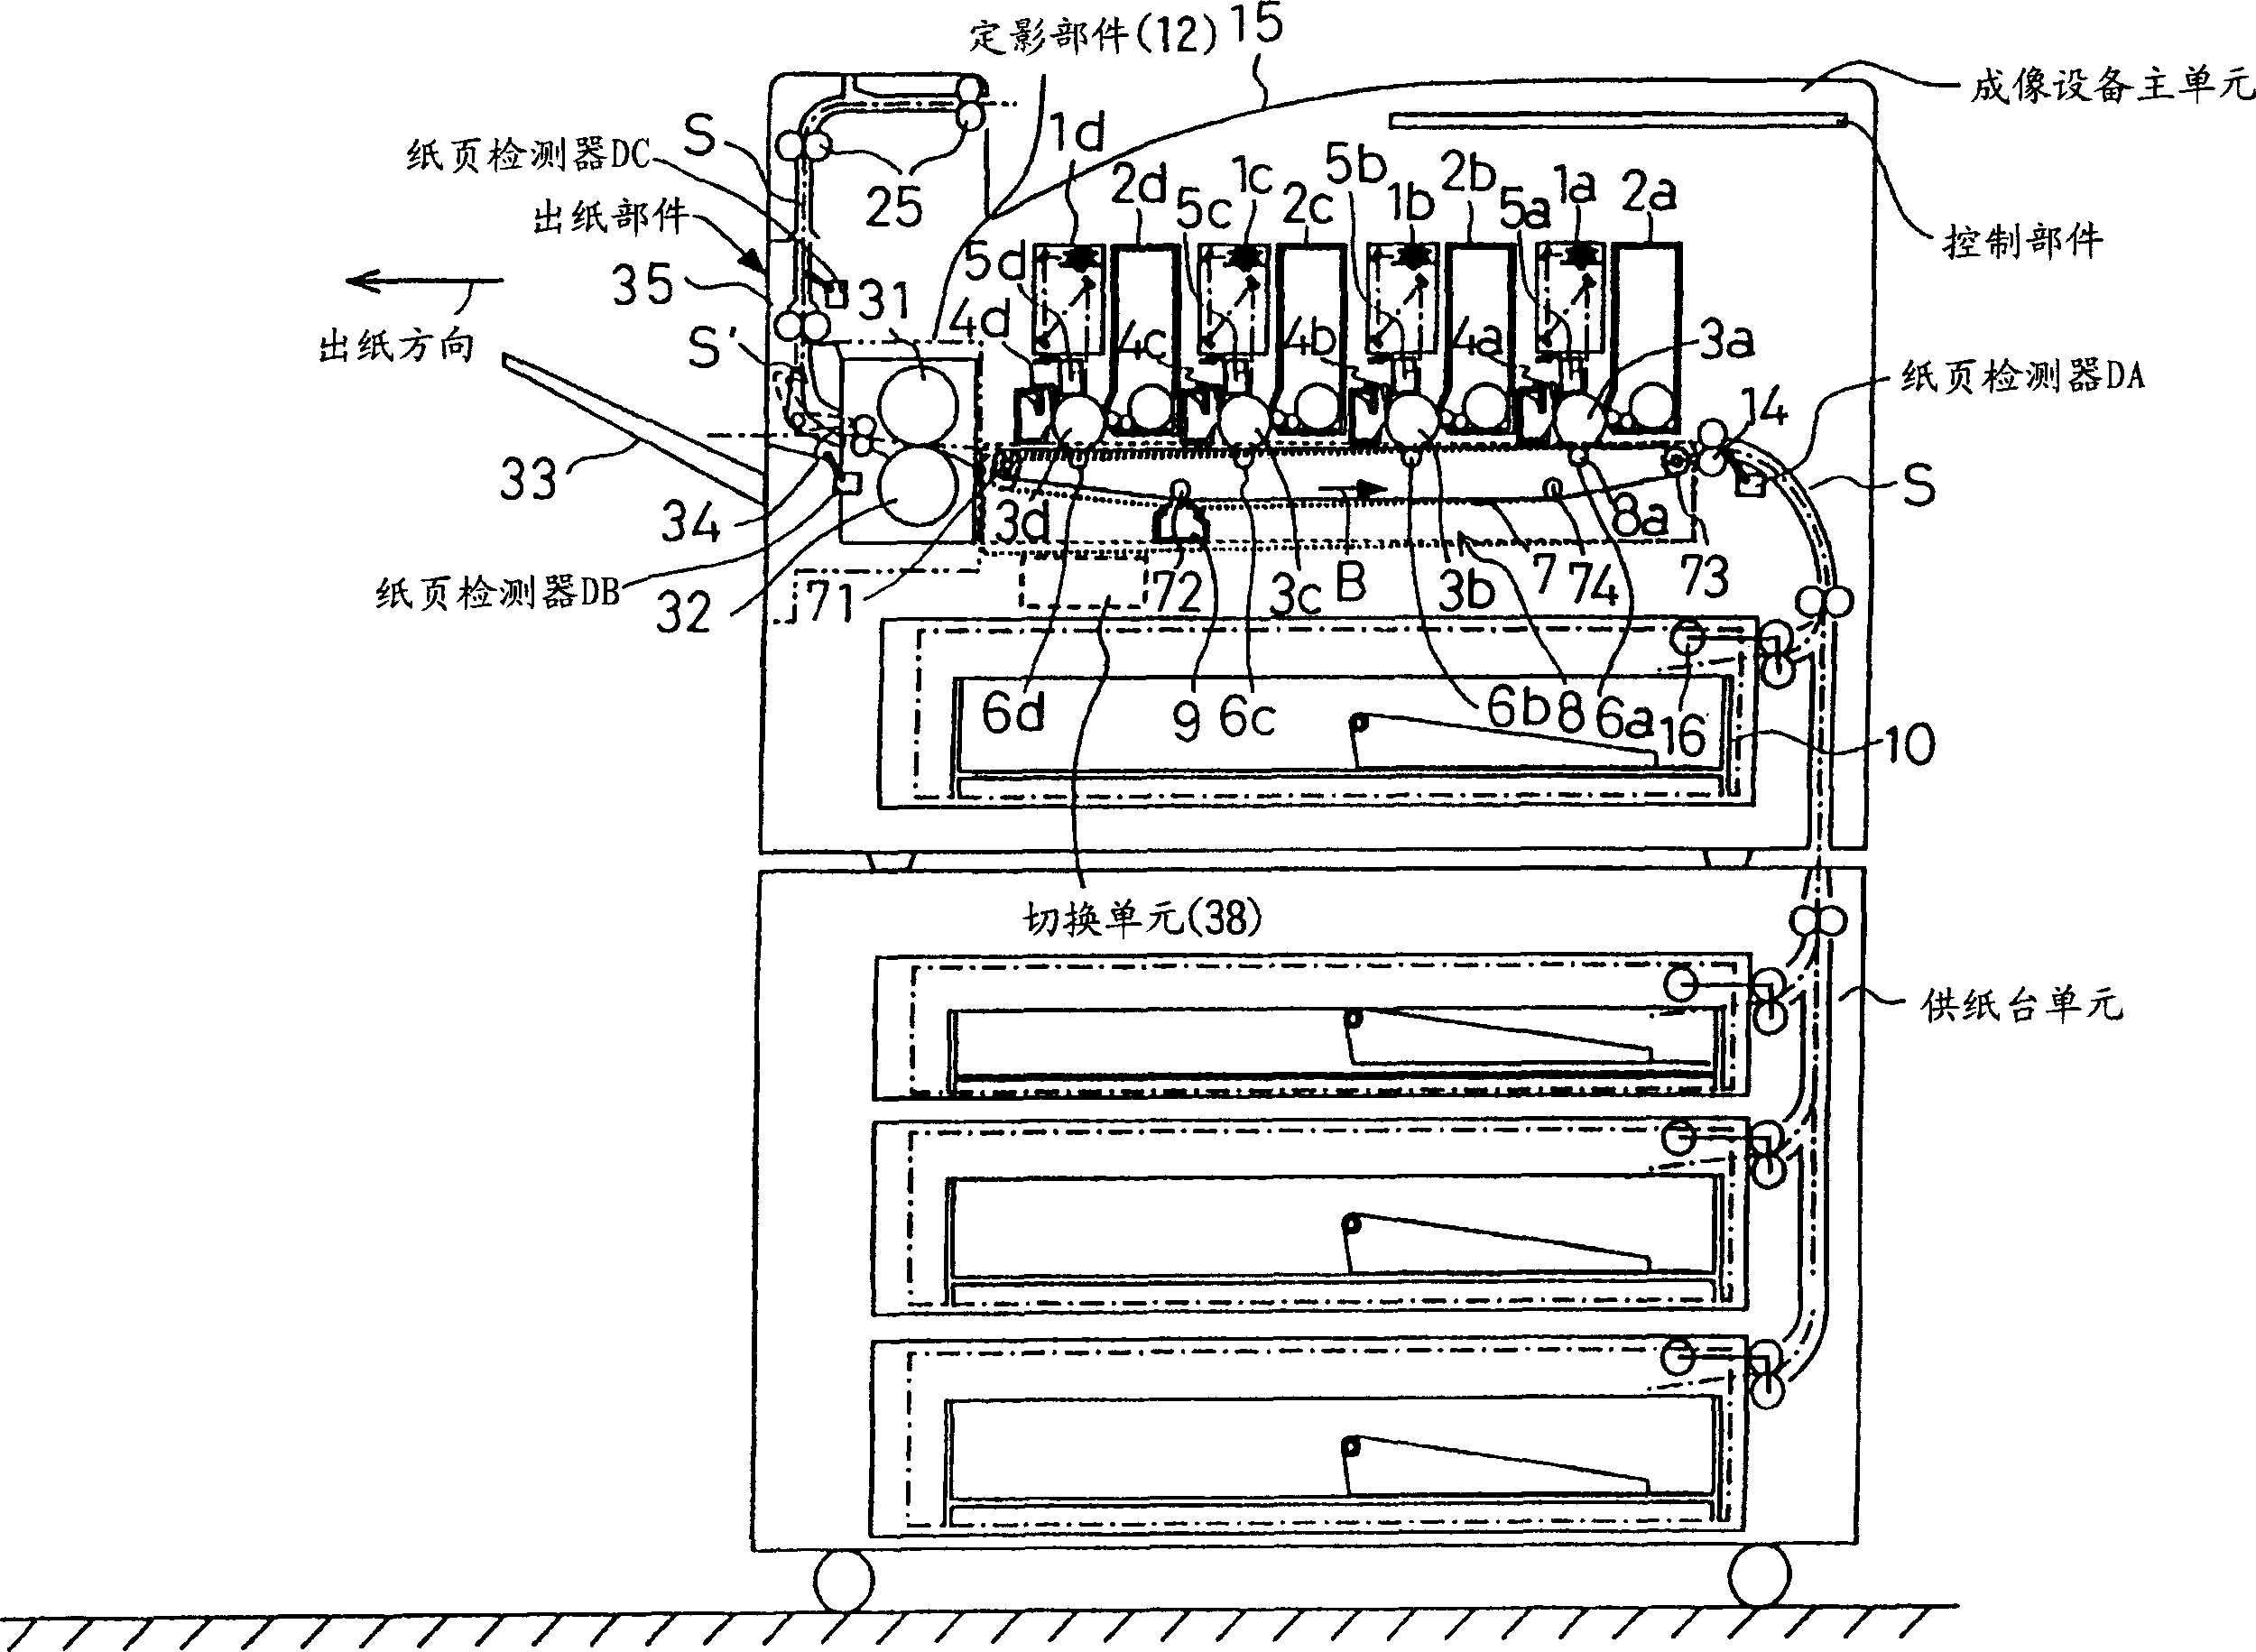 Image-formation apparatus